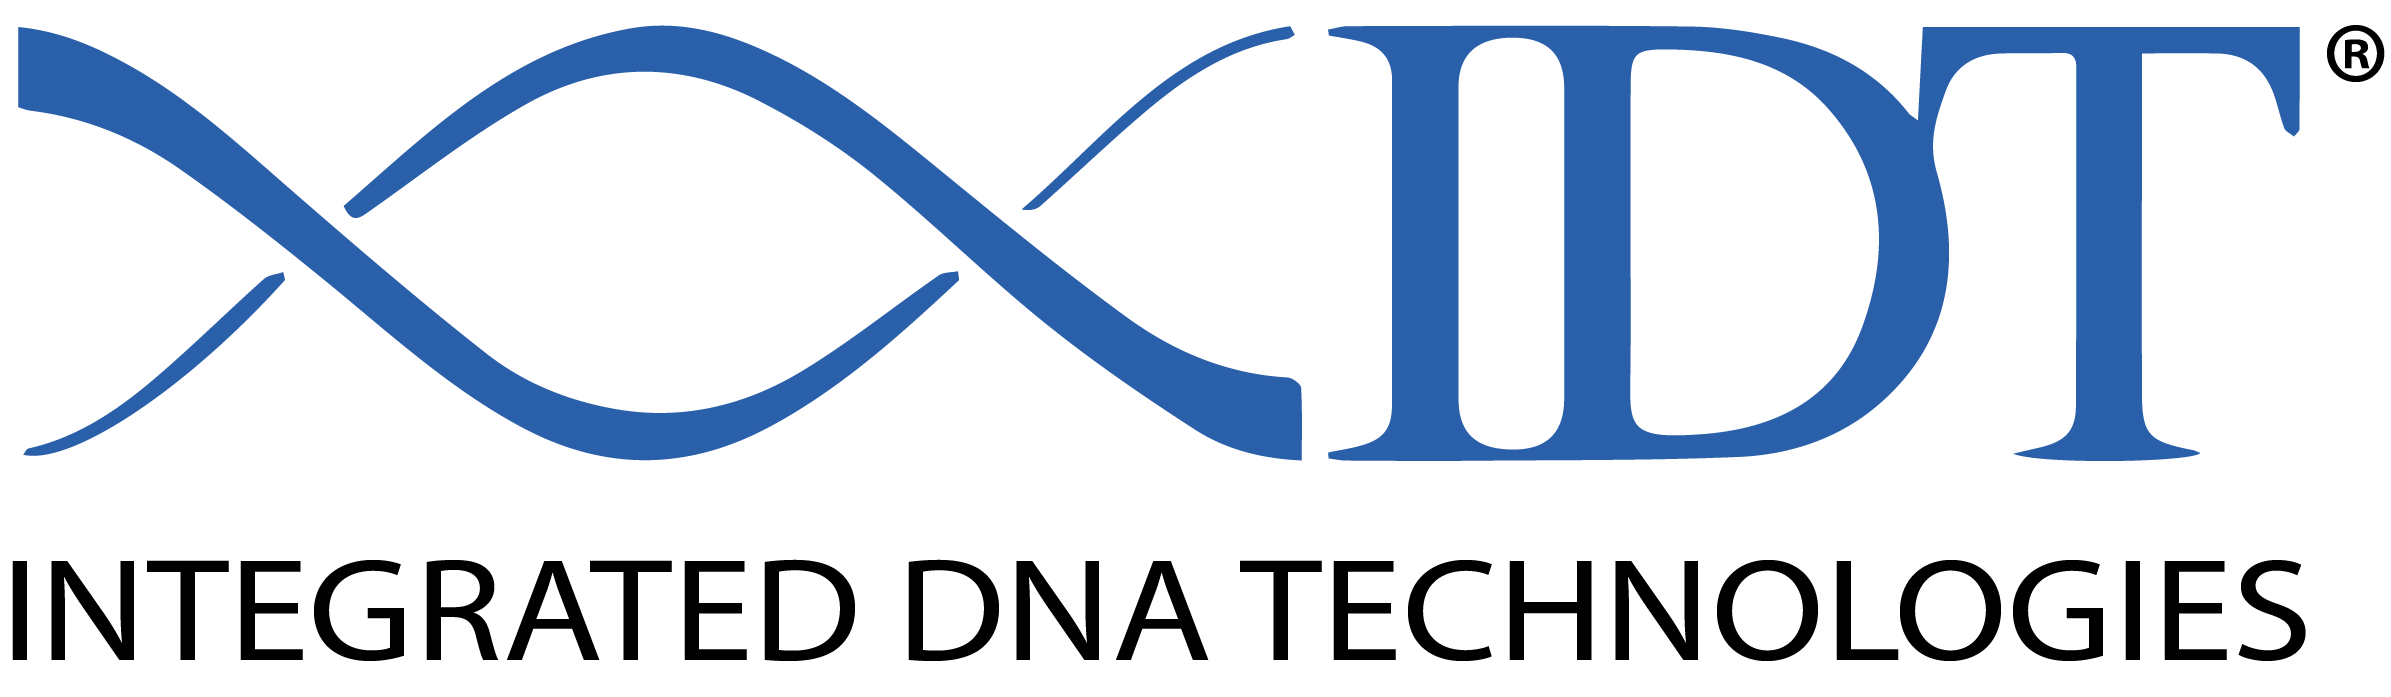 IDTech logo.png